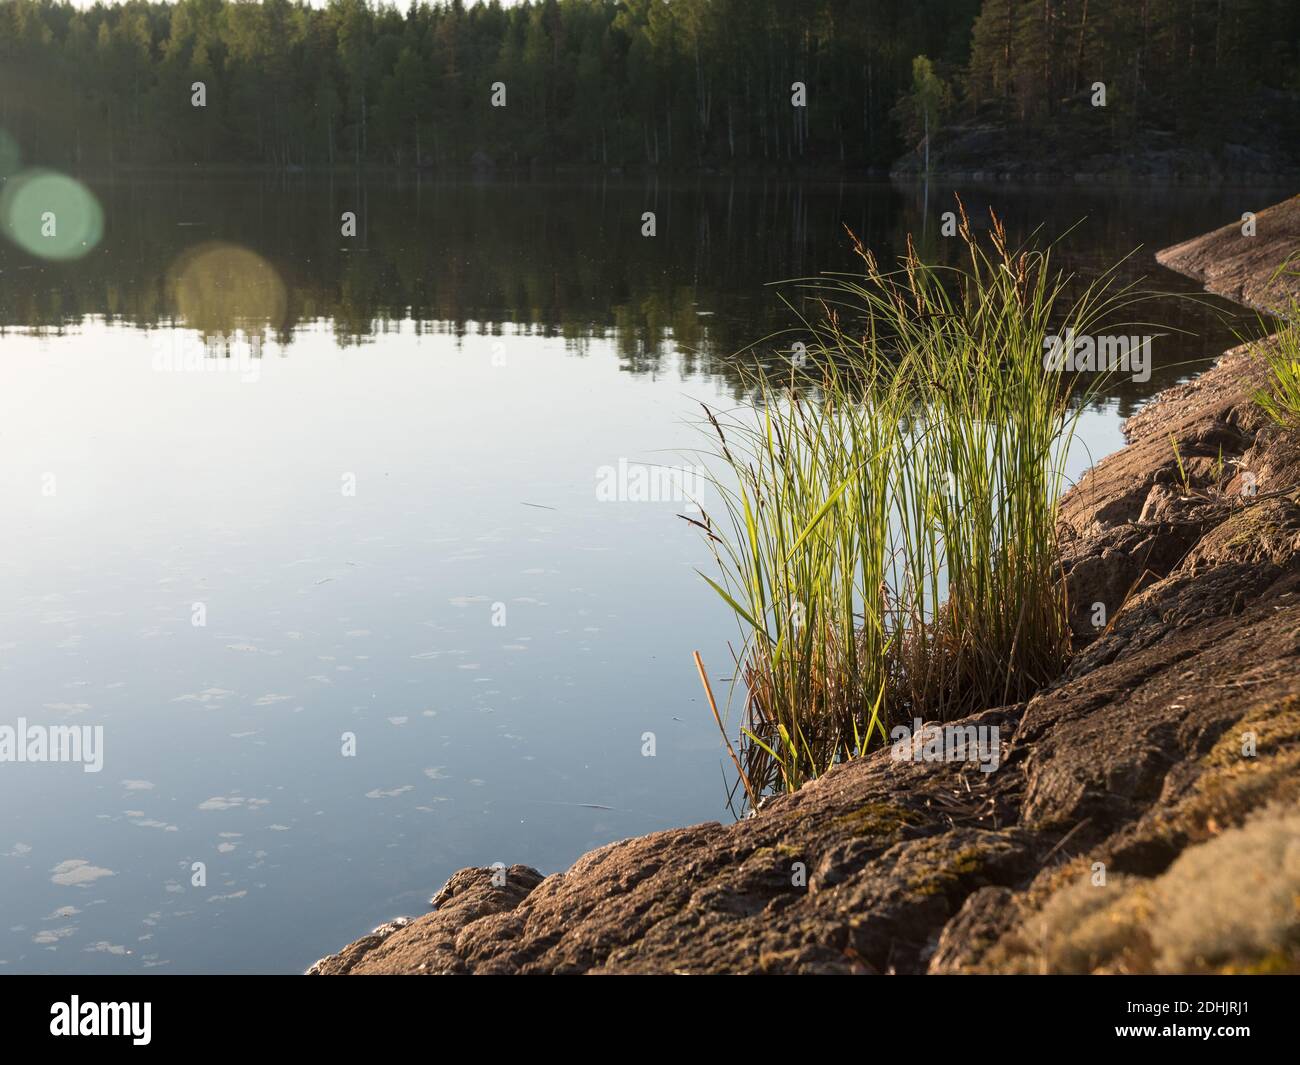 Tufted sedge growing at rocky lake shore Stock Photo